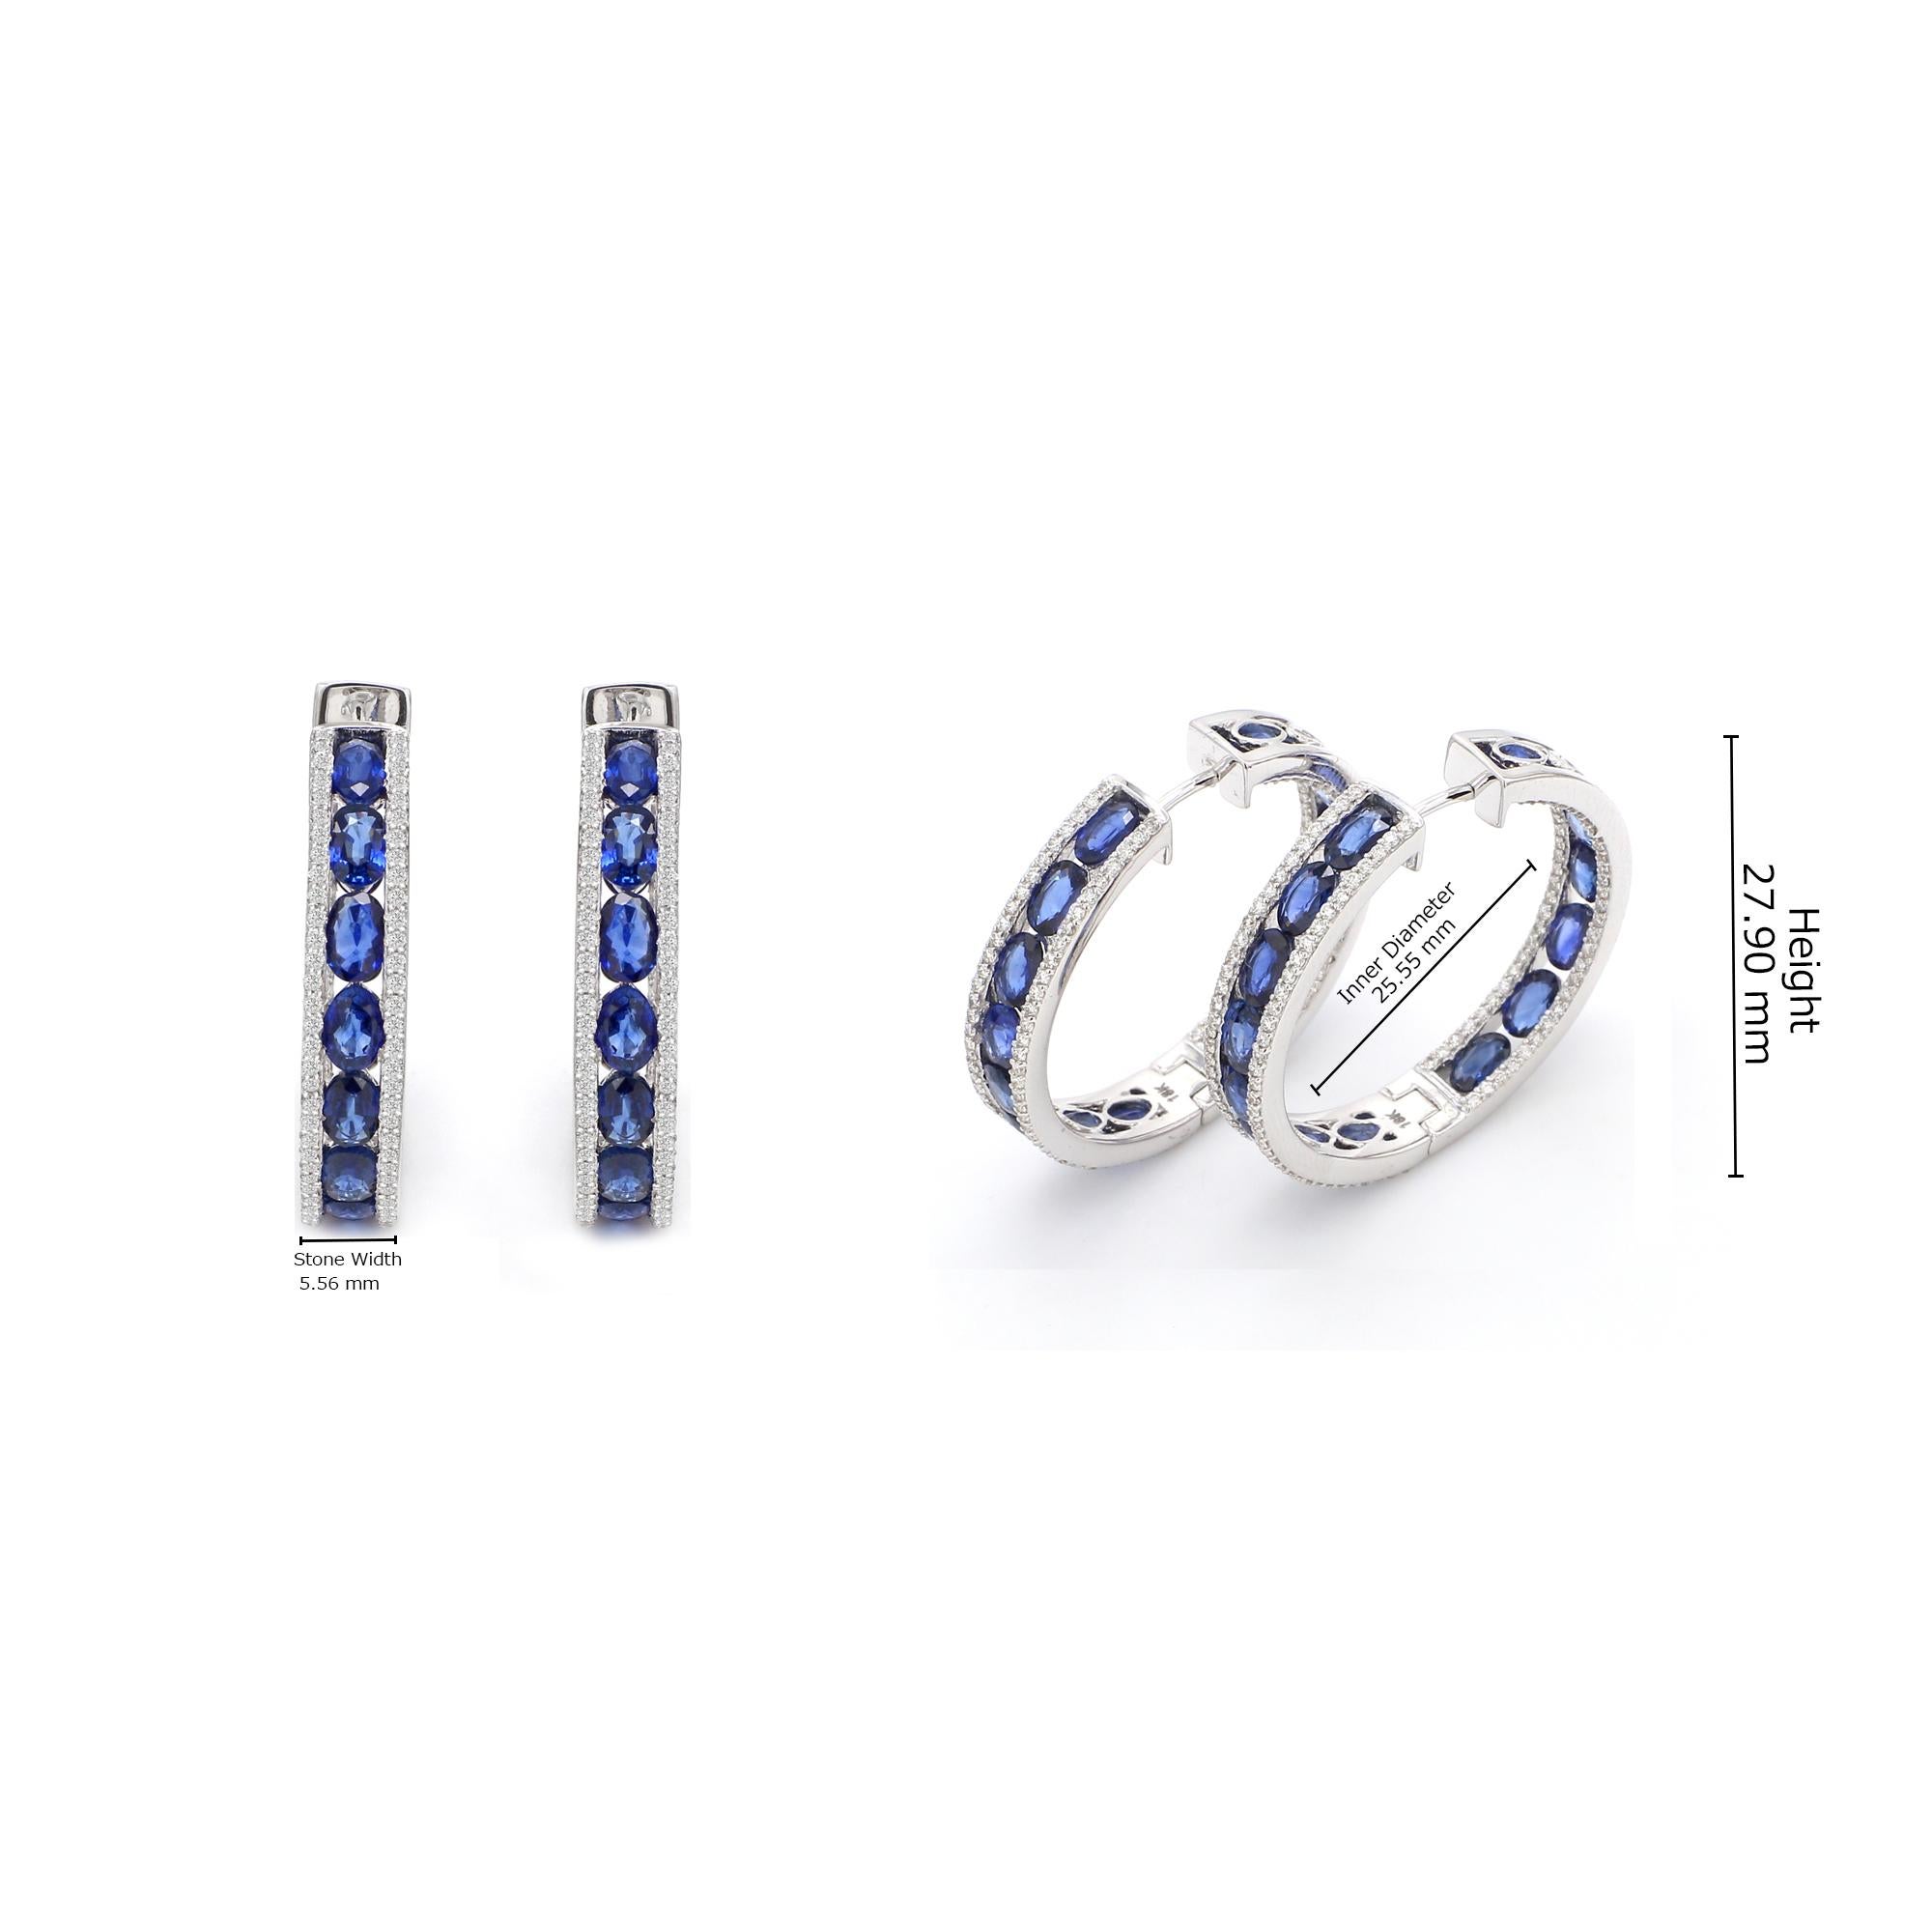 Oval Cut 18 Karat White Gold 8.51 Carat Blue Sapphire and Diamond Hoop Earrings For Sale